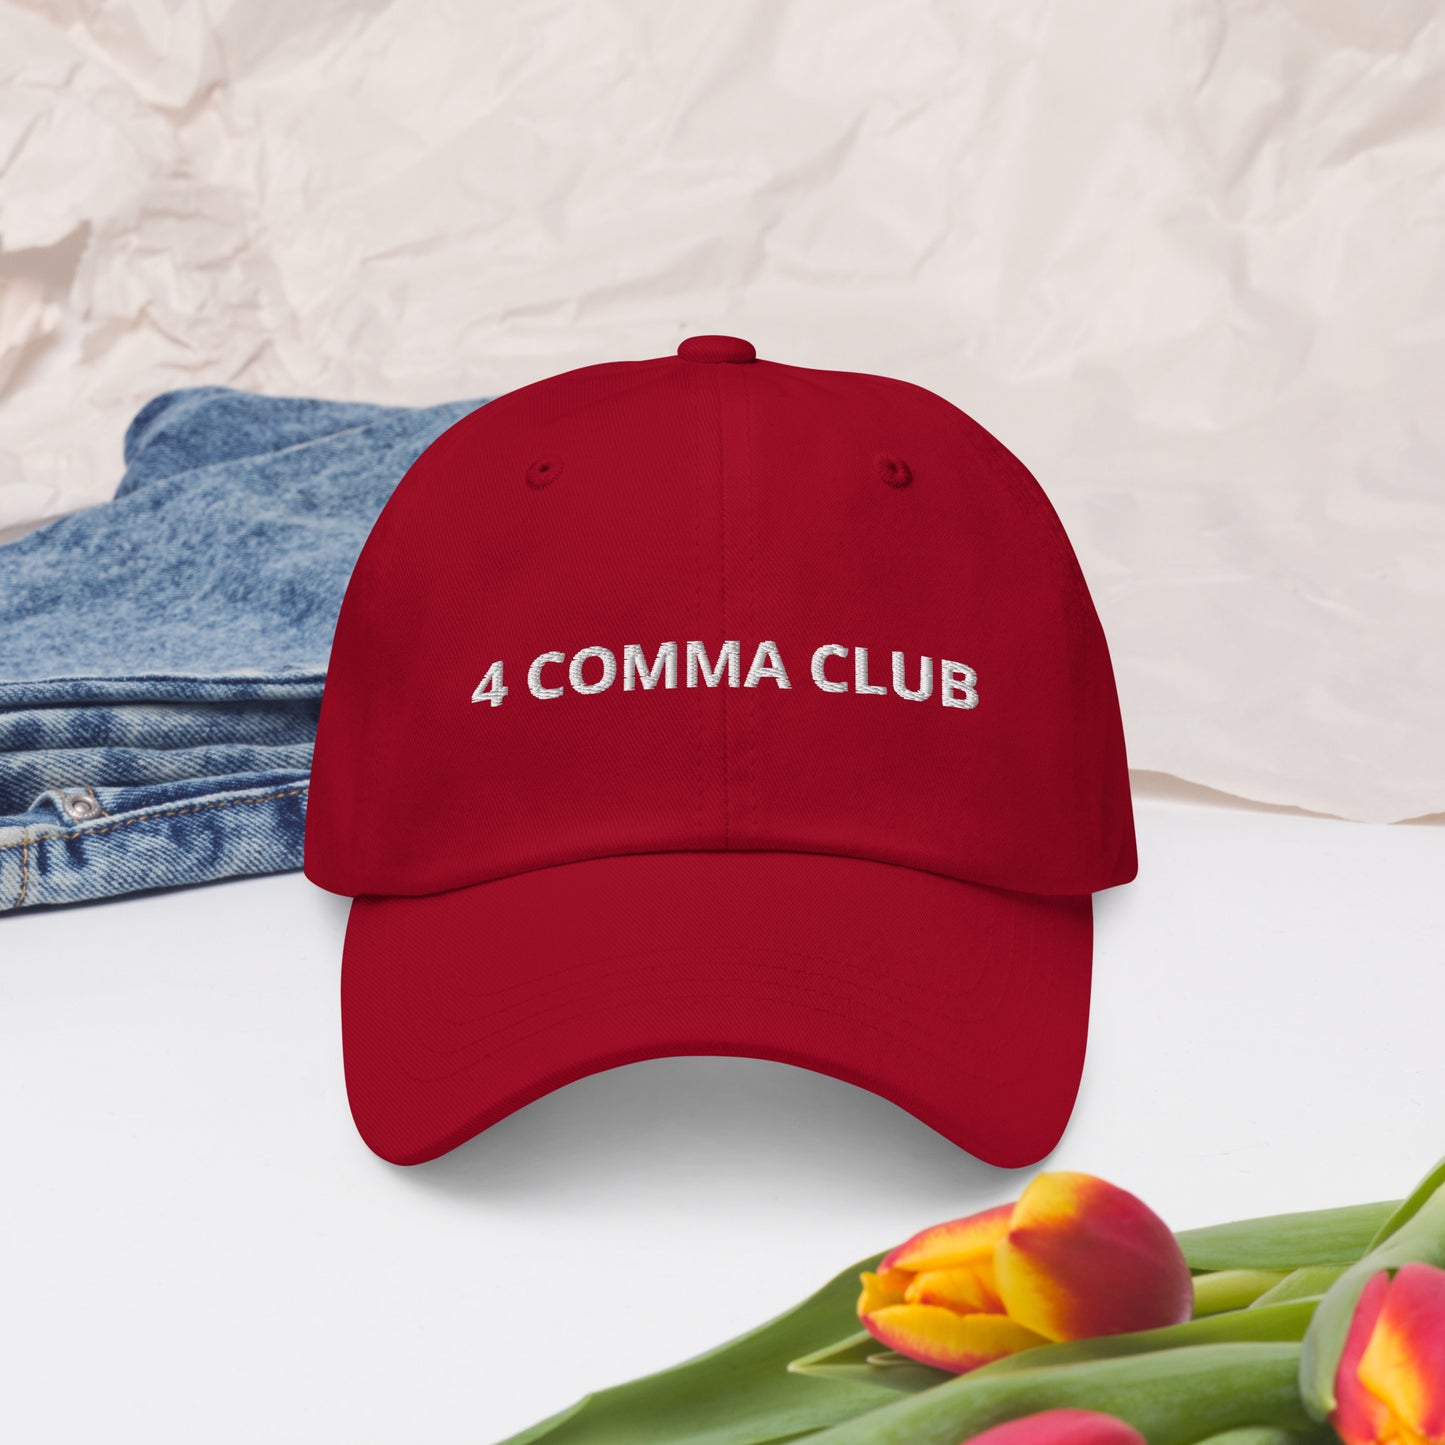 4 COMMA CLUB hat